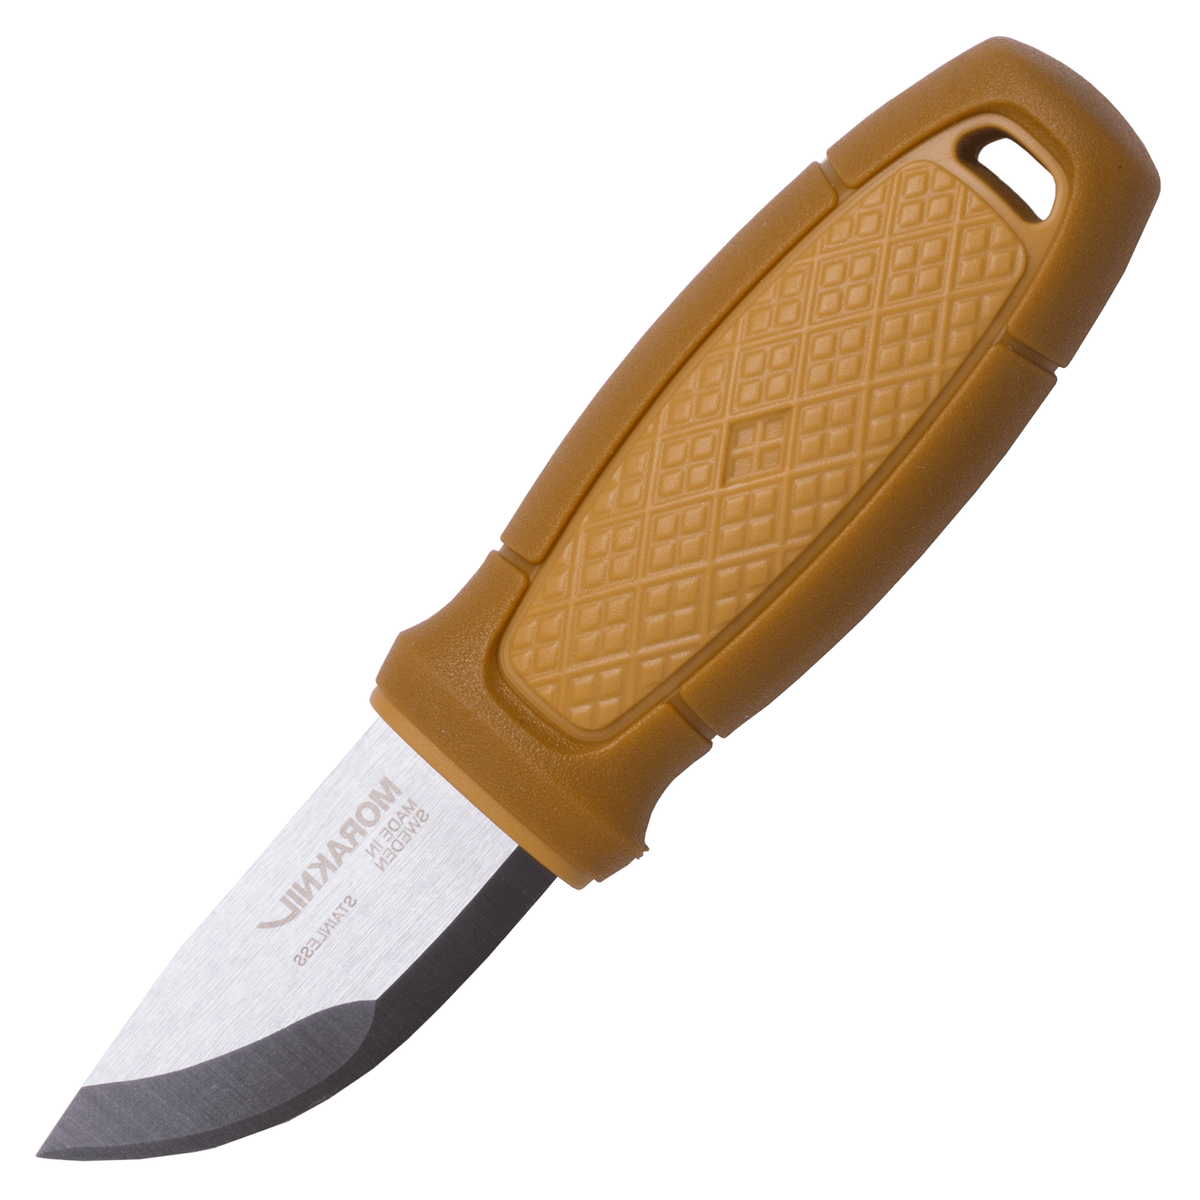 Morakniv Eldris (S) Outdoor Bushcraft Knife With Fire Kit (6 Versions)